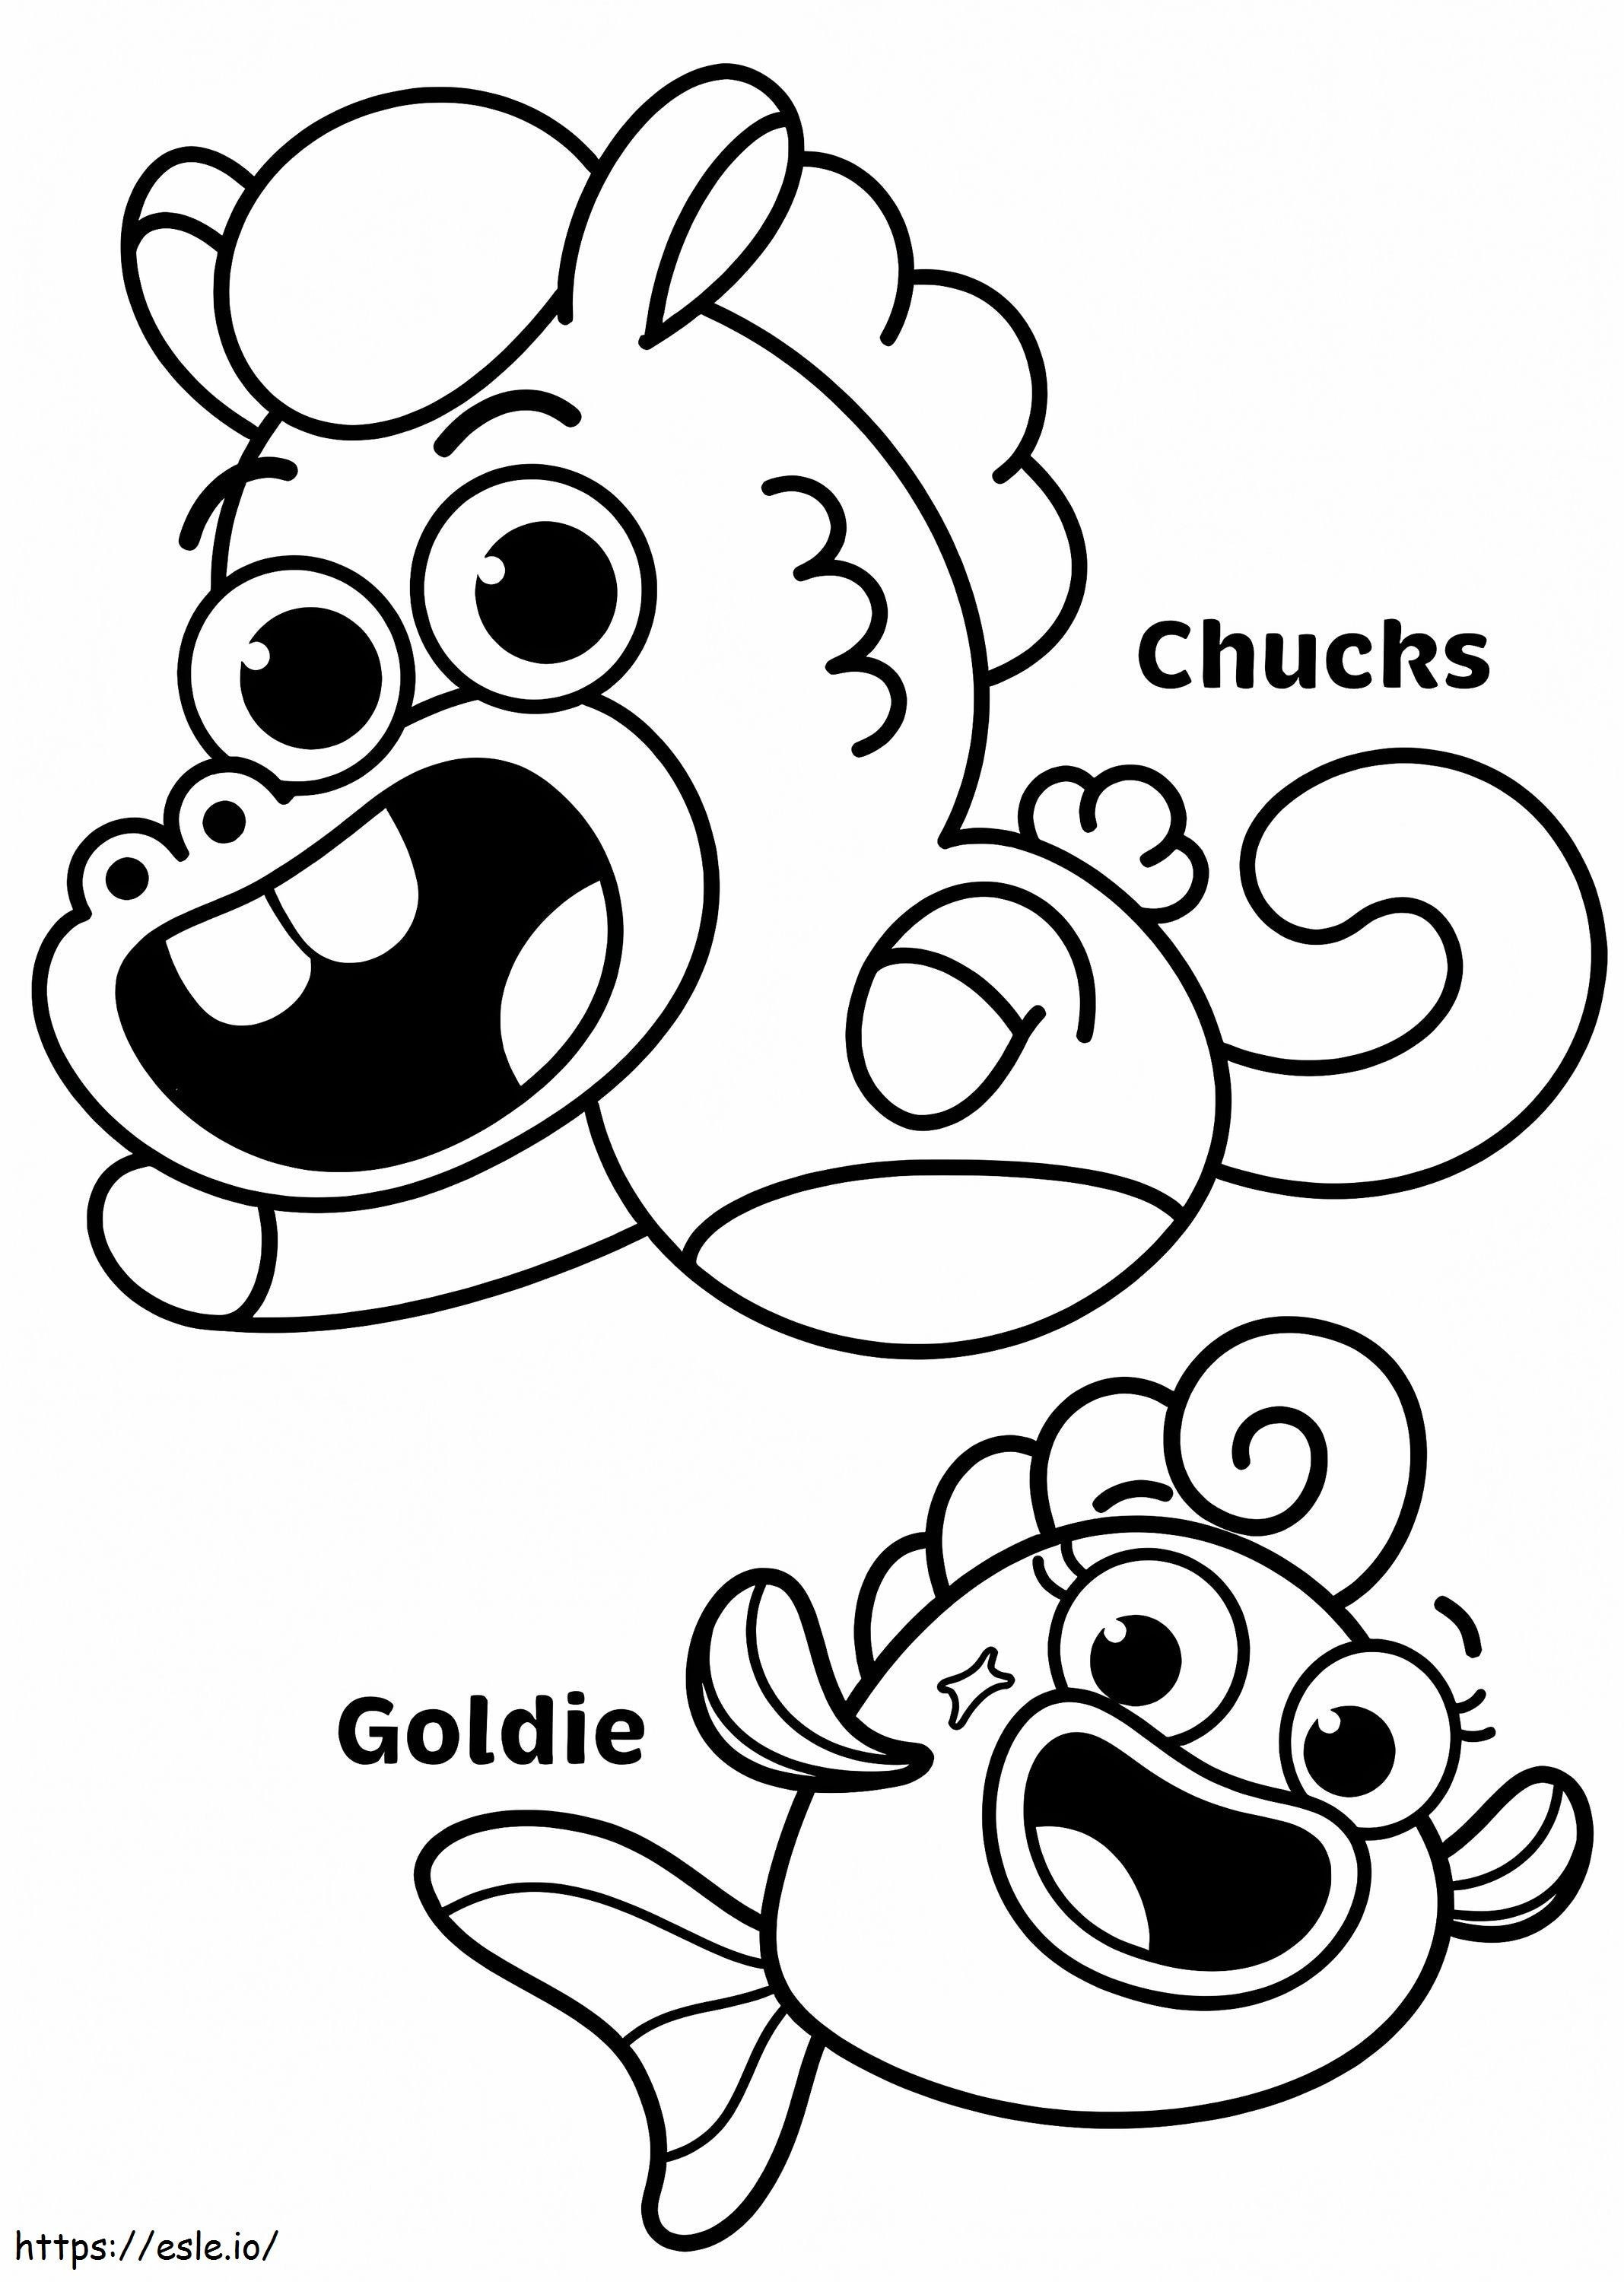 Chunks e Goldie de Baby Shark para colorir